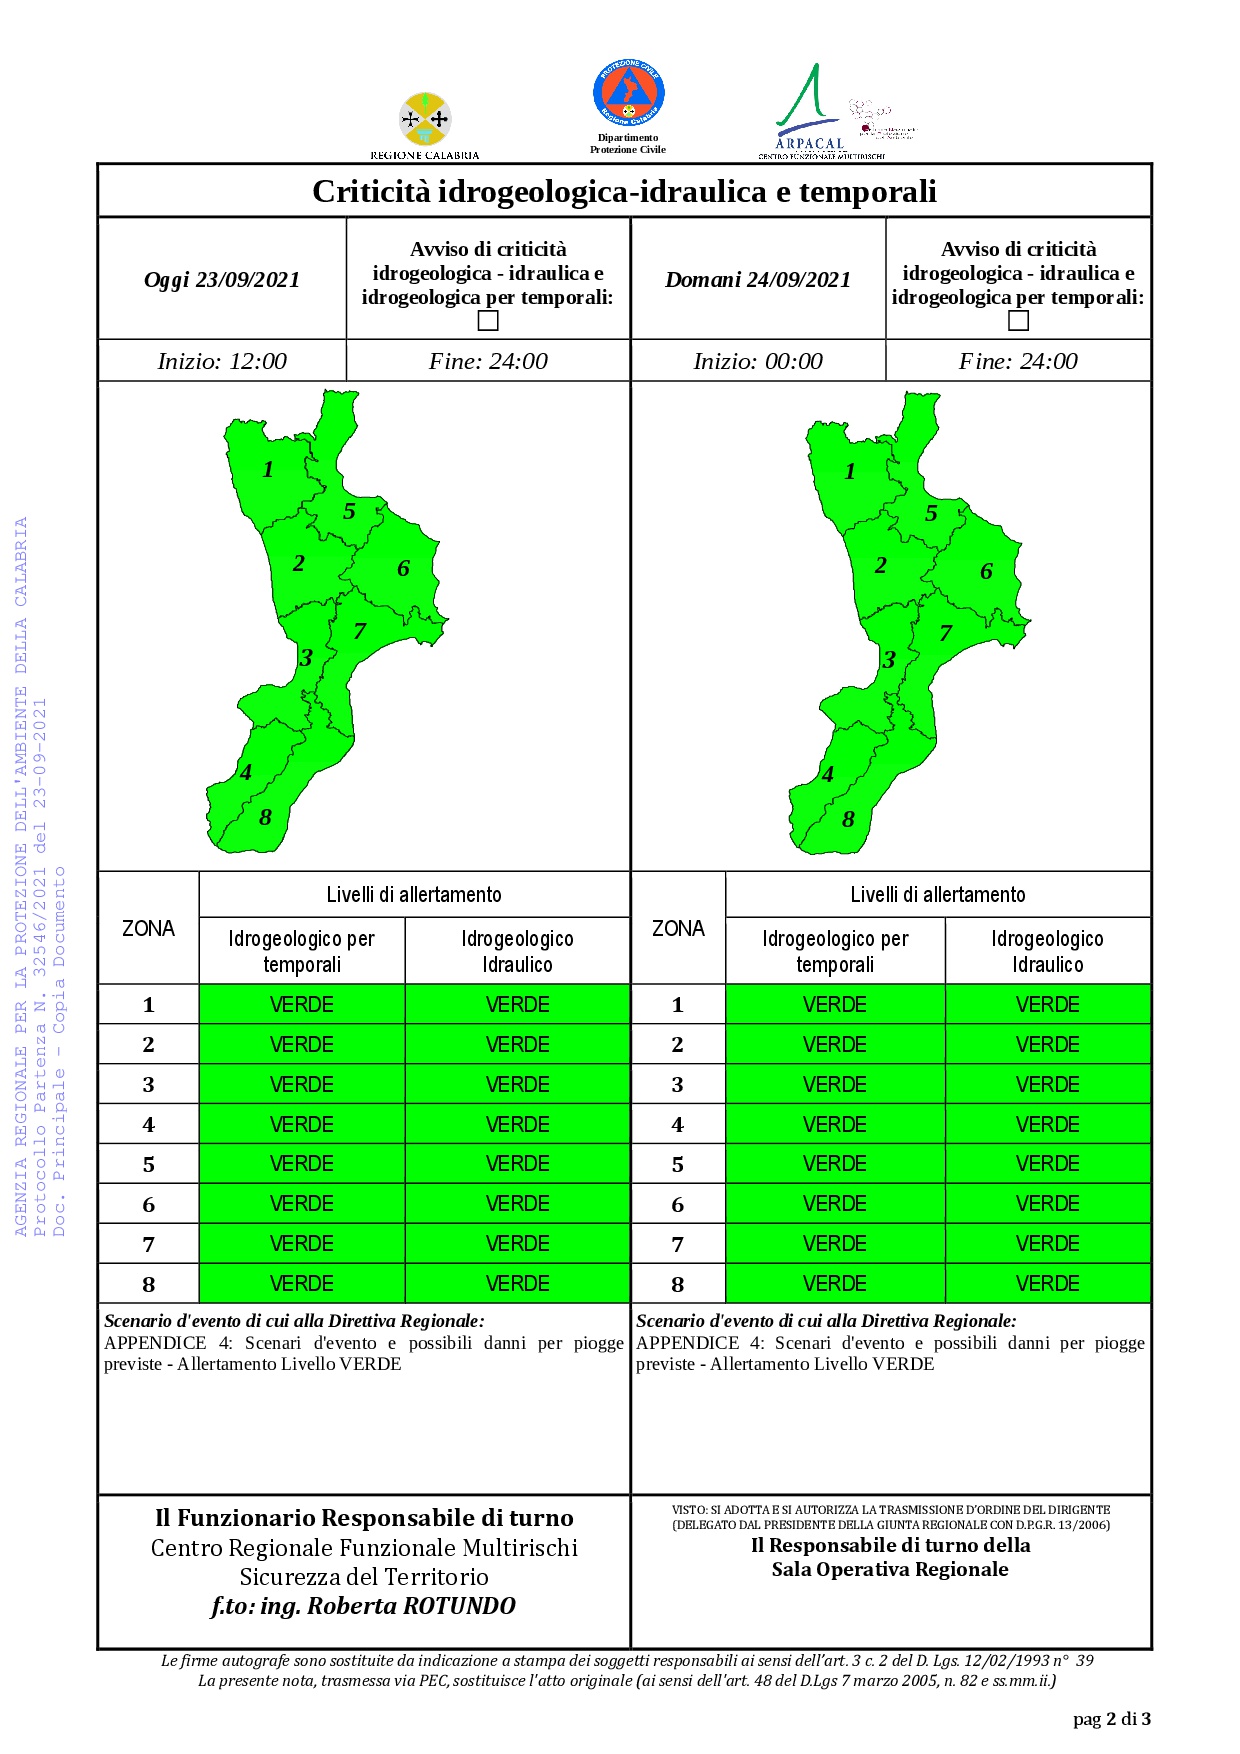 Criticità idrogeologica-idraulica e temporali in Calabria 23-09-2021